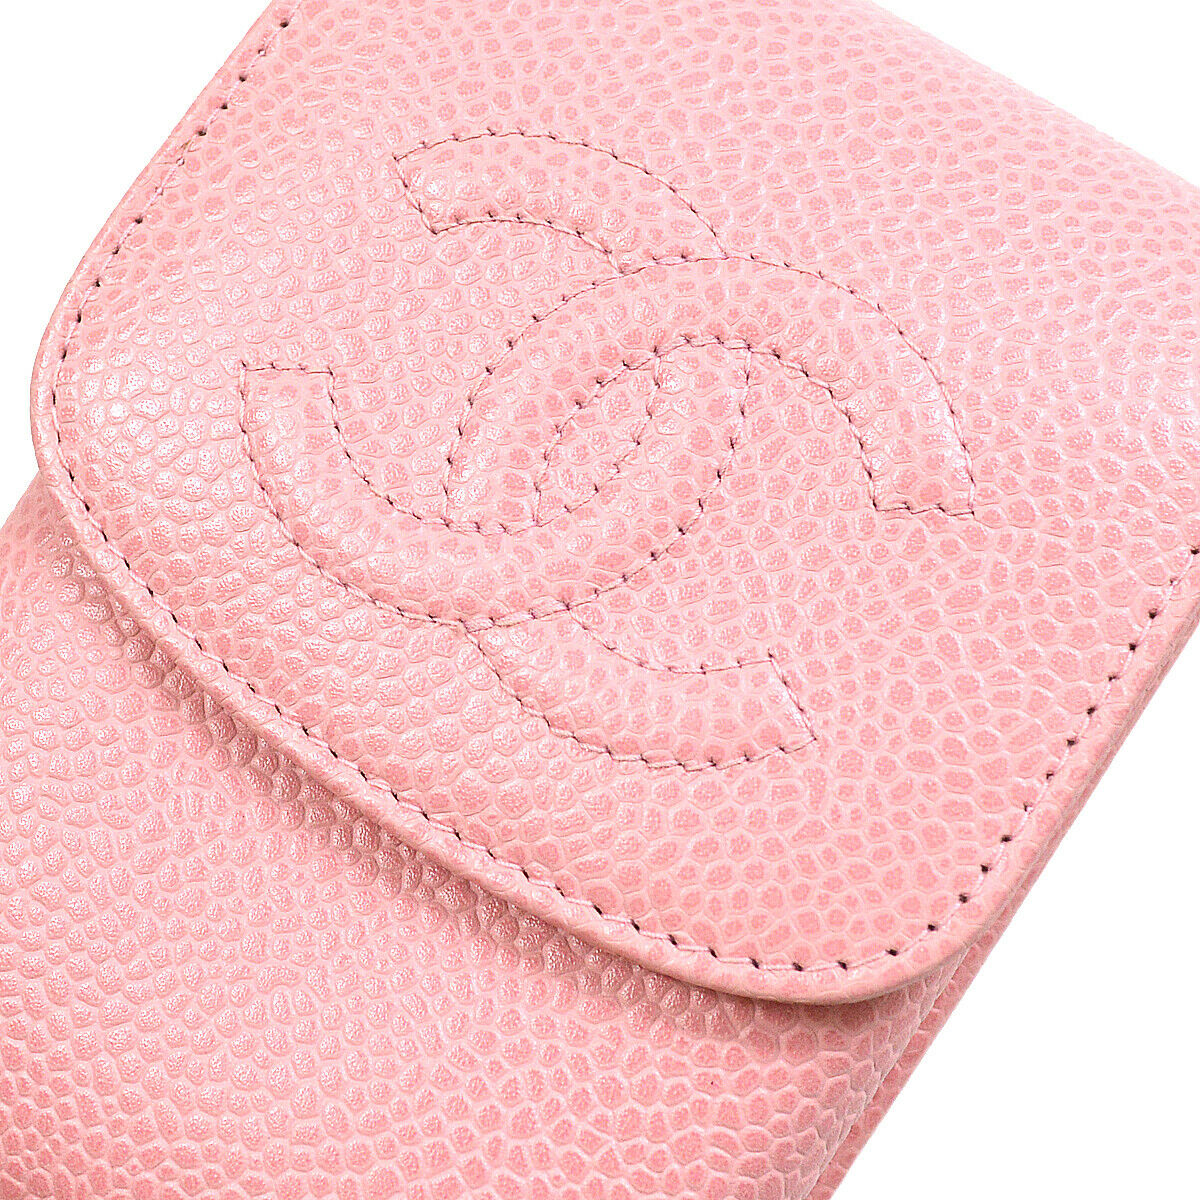 100 off CHANEL Purse Wallet Set 3 Pcs Pink Caviar Leather  Etsy